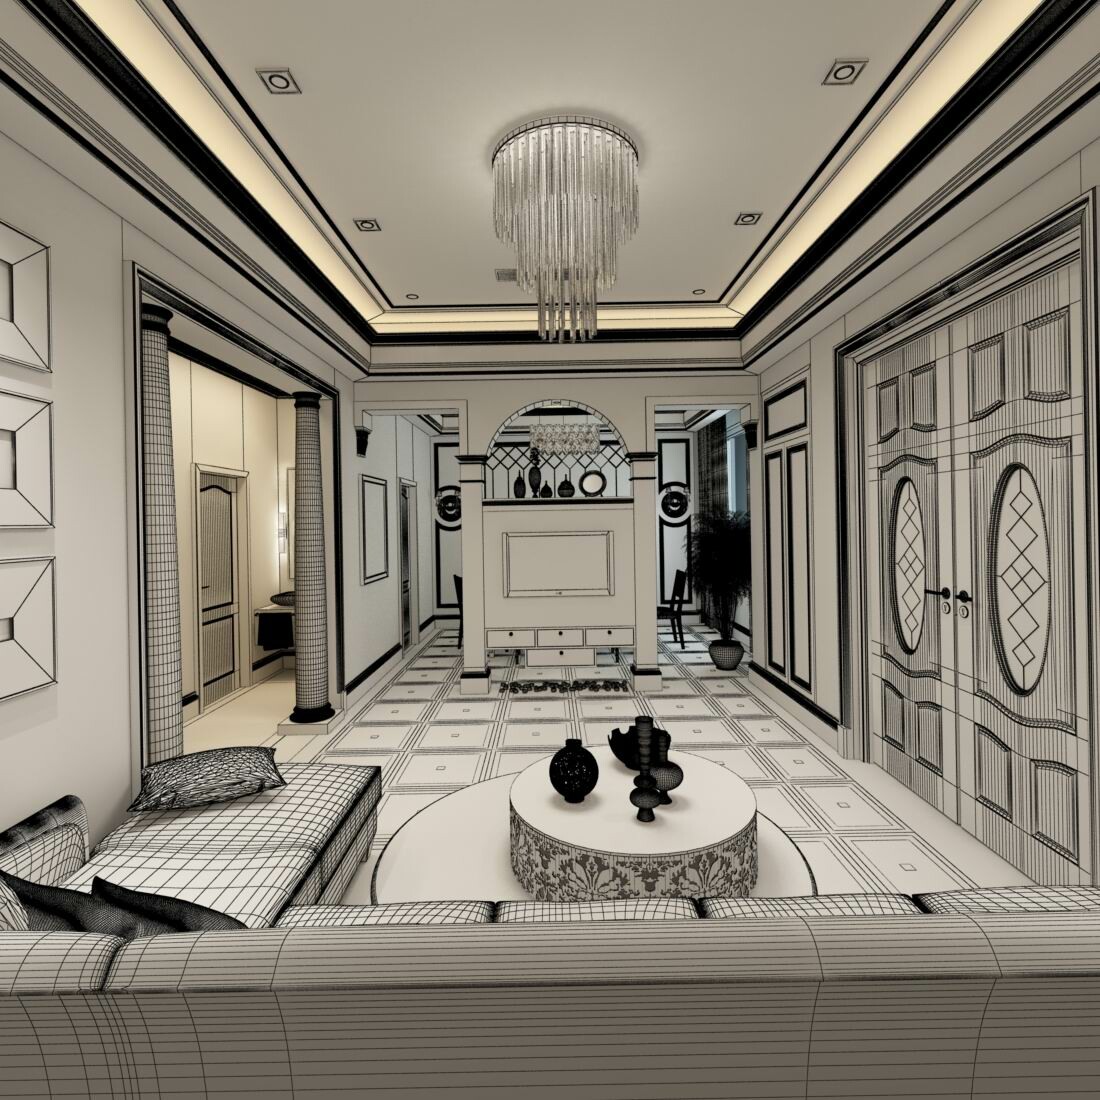 ArtStation - Luxury stylish interior living room - 08 | Resources